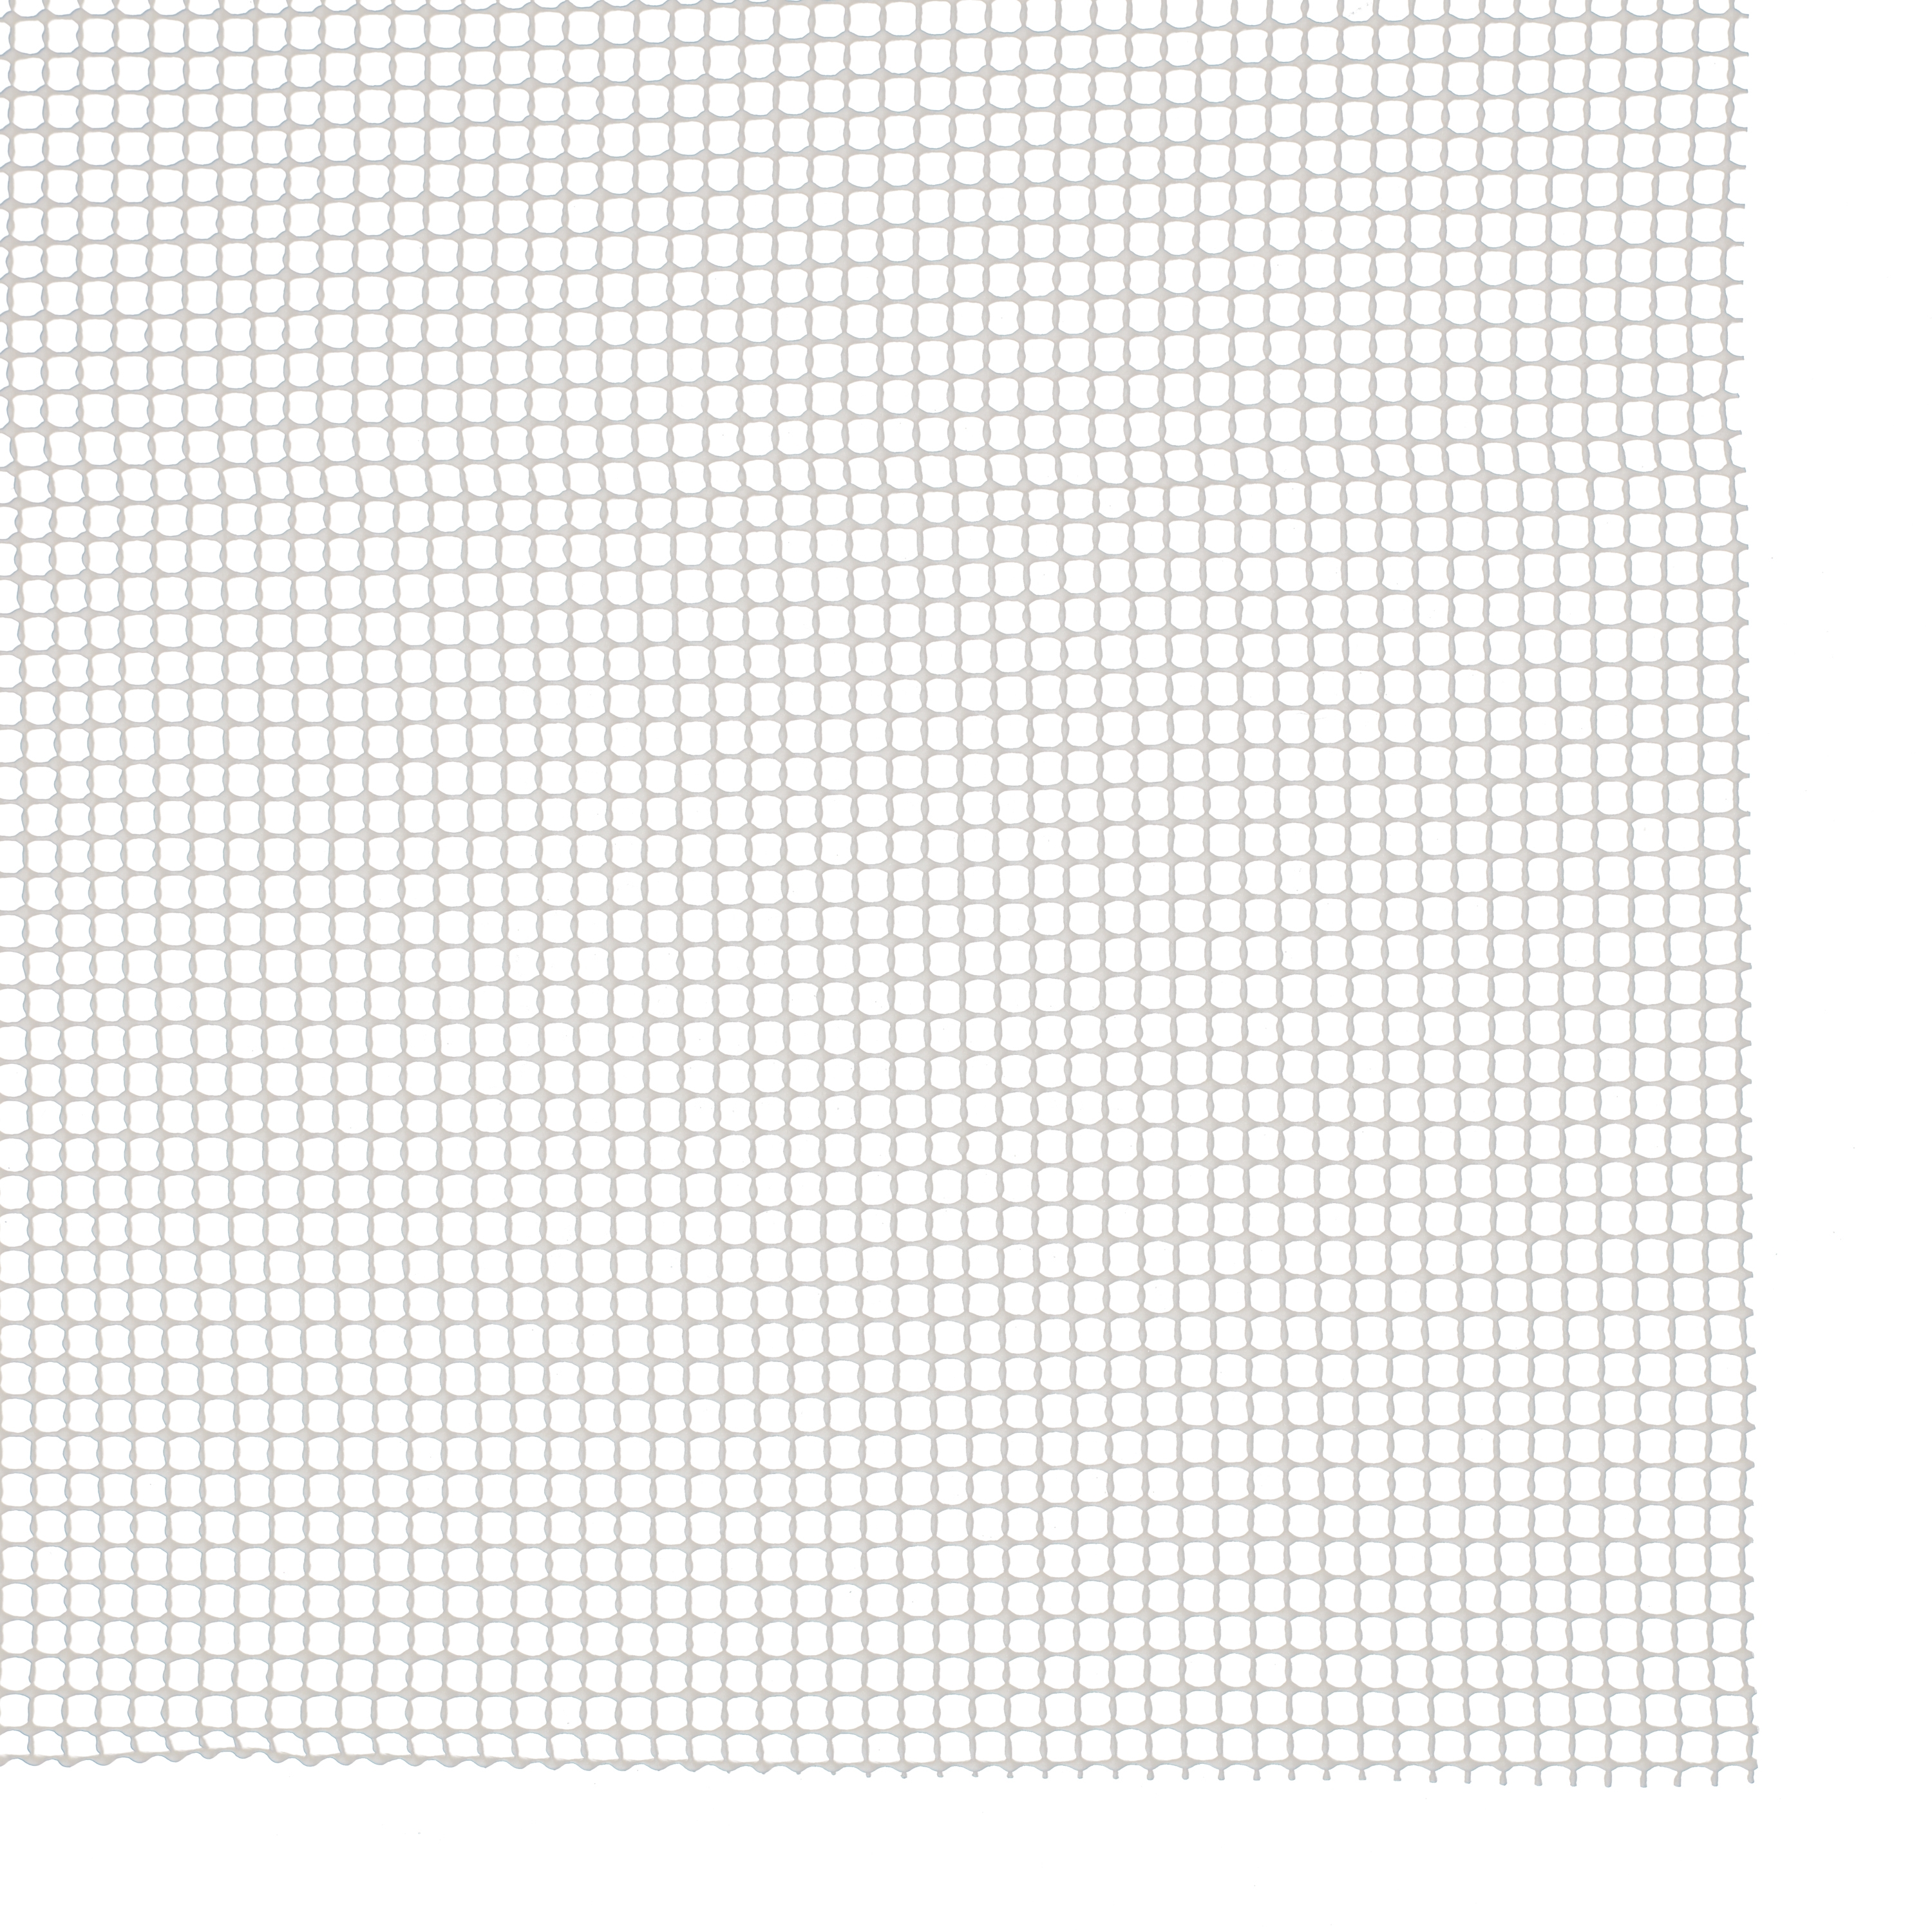 Standard Open Weave Rug Pad (5'X8') - Image 3